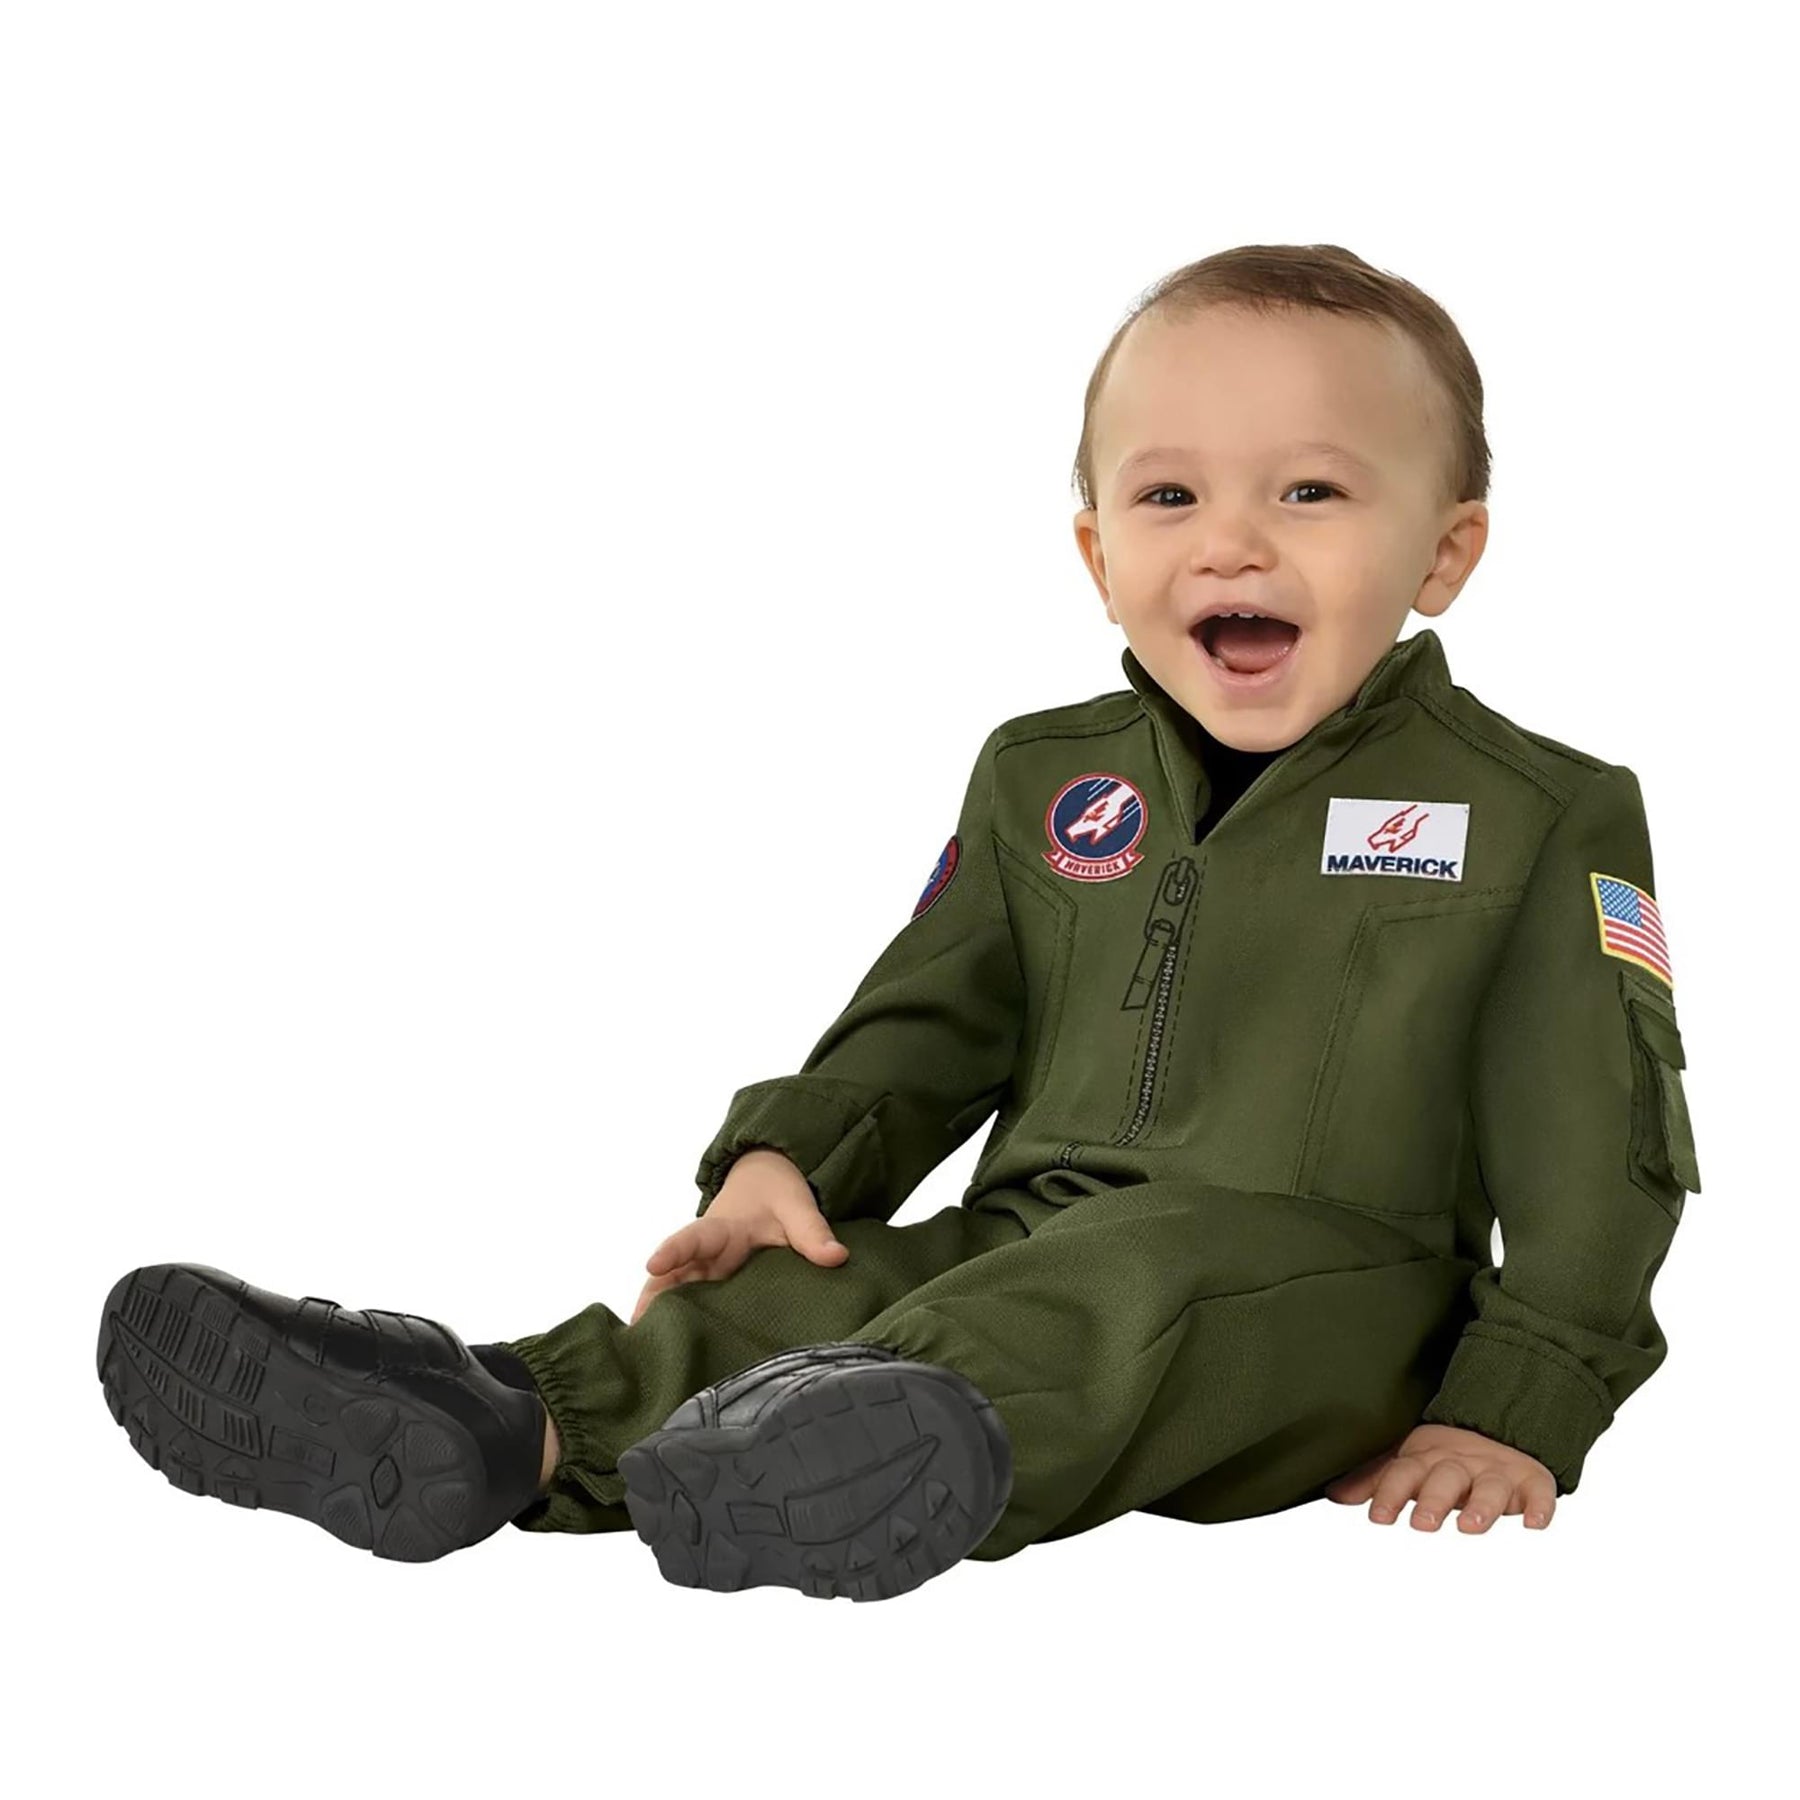 Top Gun Infant Costume